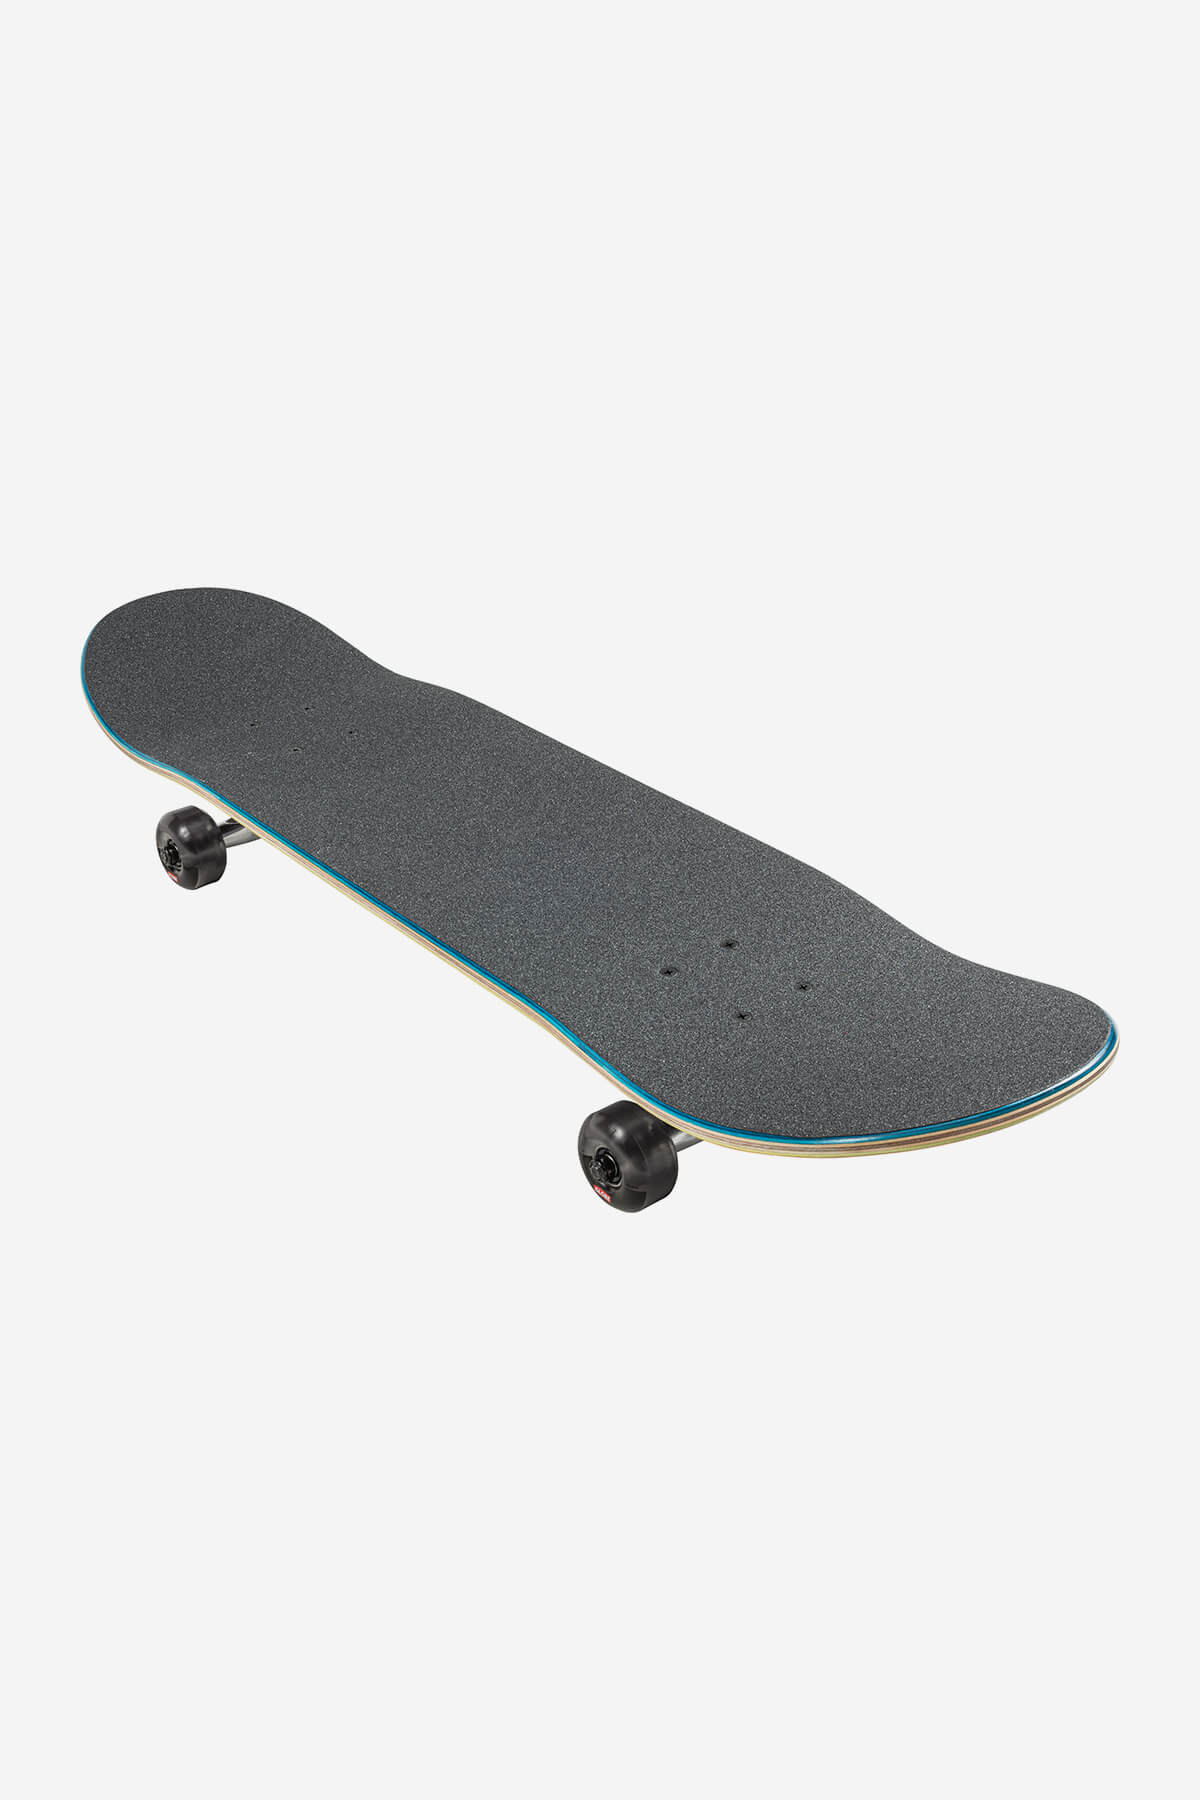 g1 ablaze black dye 8.0" complet skateboard